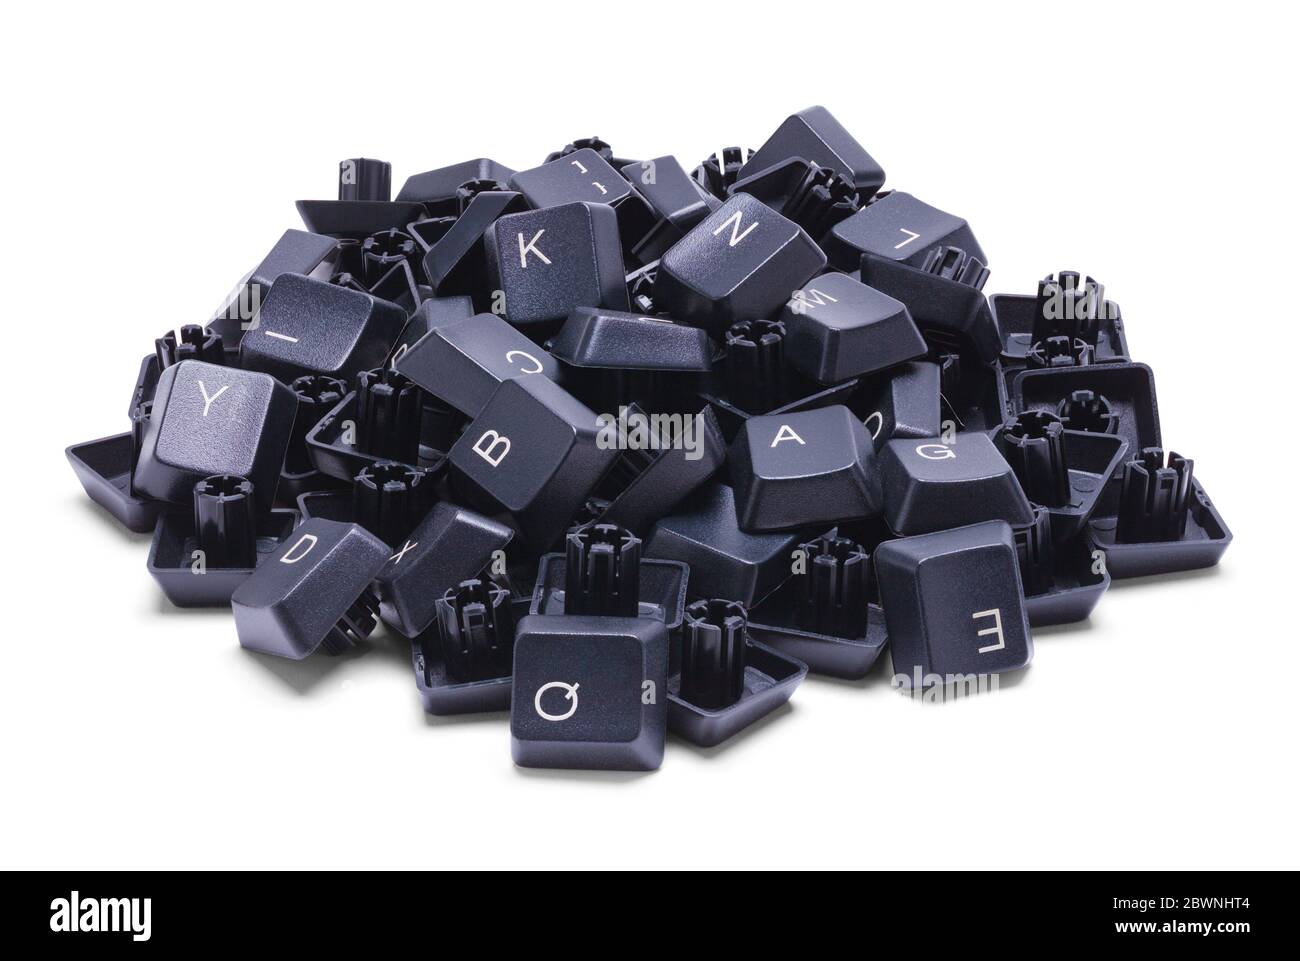 Pile of Black Computer Keyboard Keys Isolated on White. Stock Photo